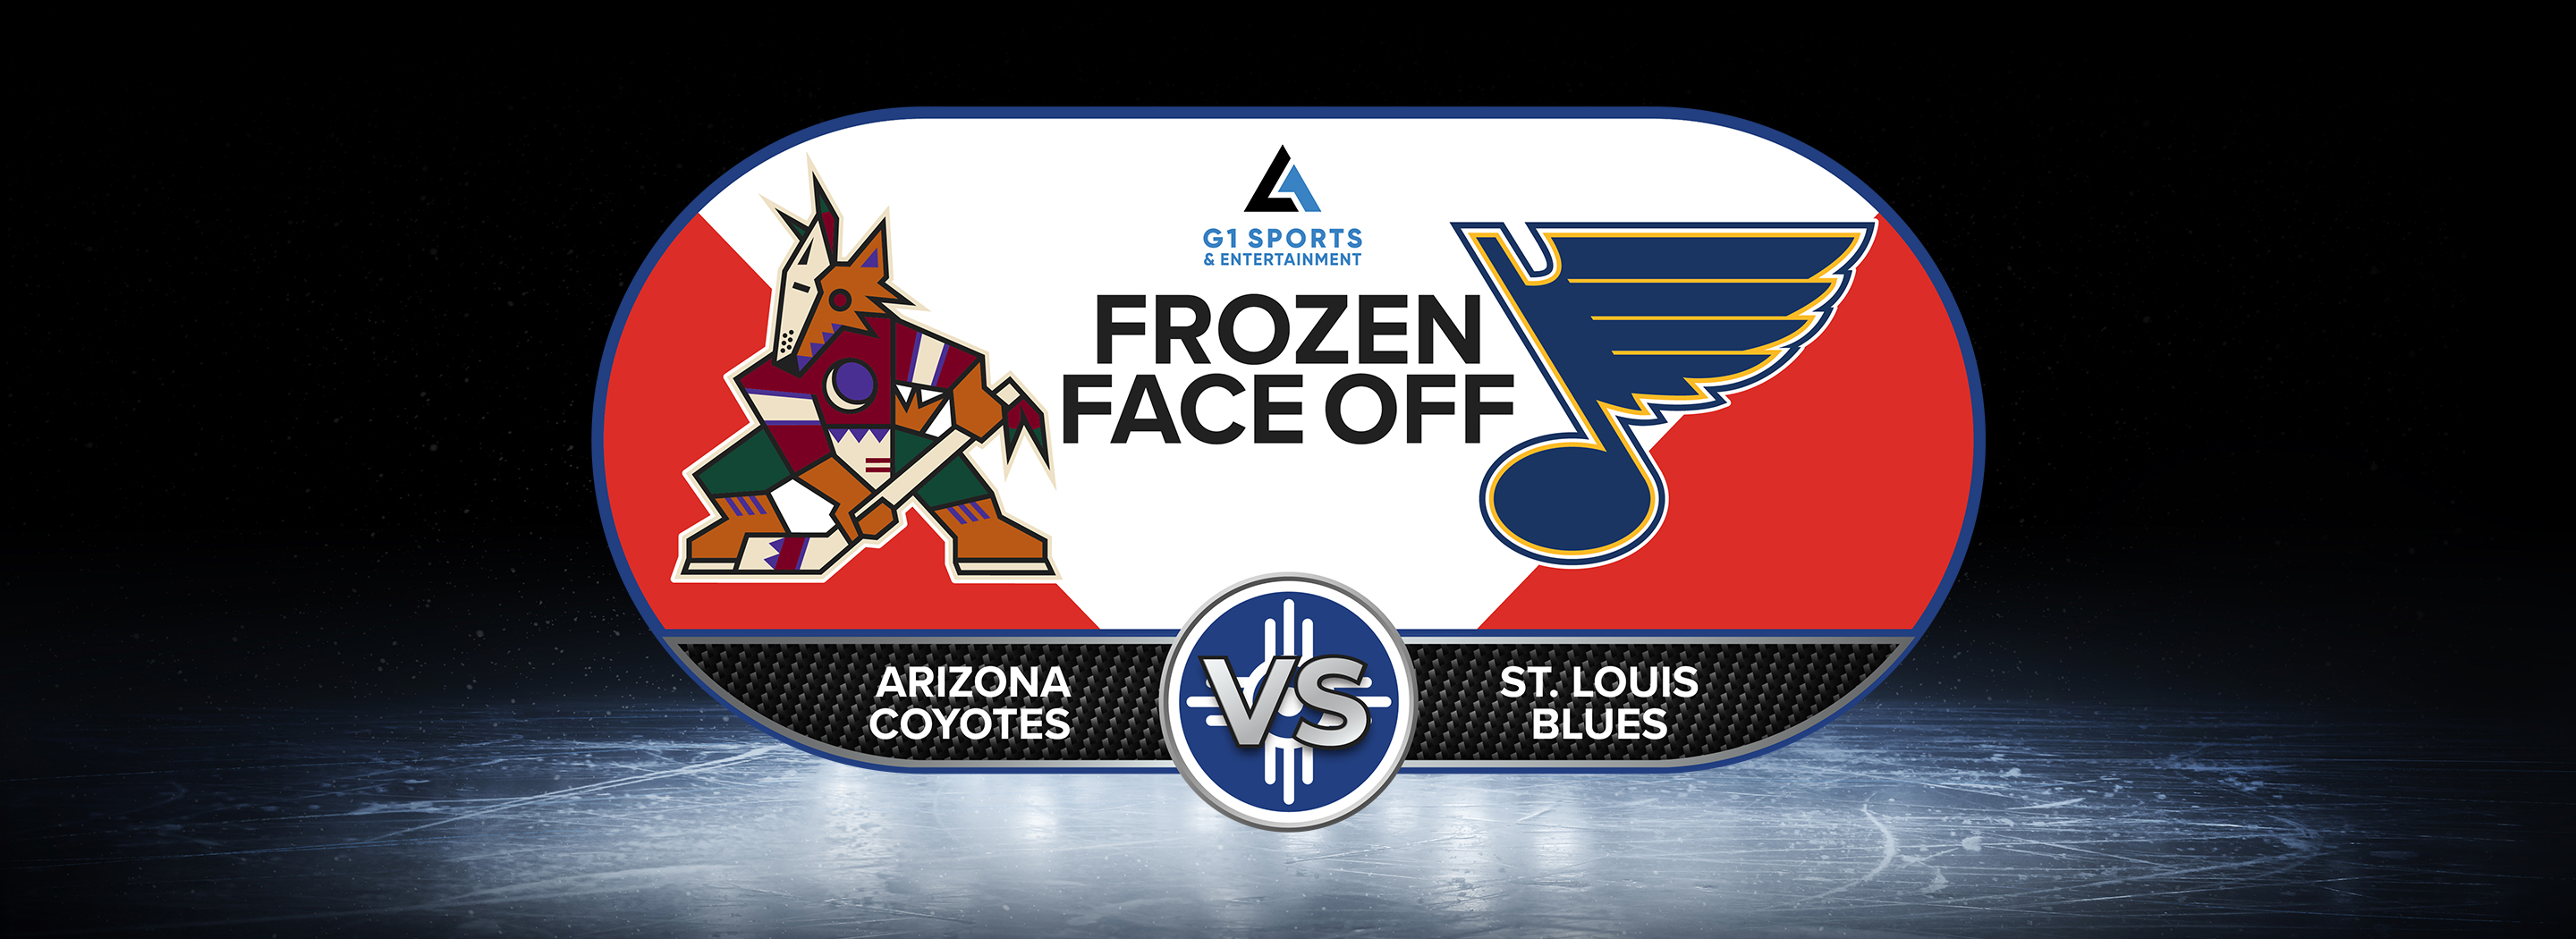 Arizona Coyotes vs St. Louis Blues at INTRUST Bank Arena - SEP 24